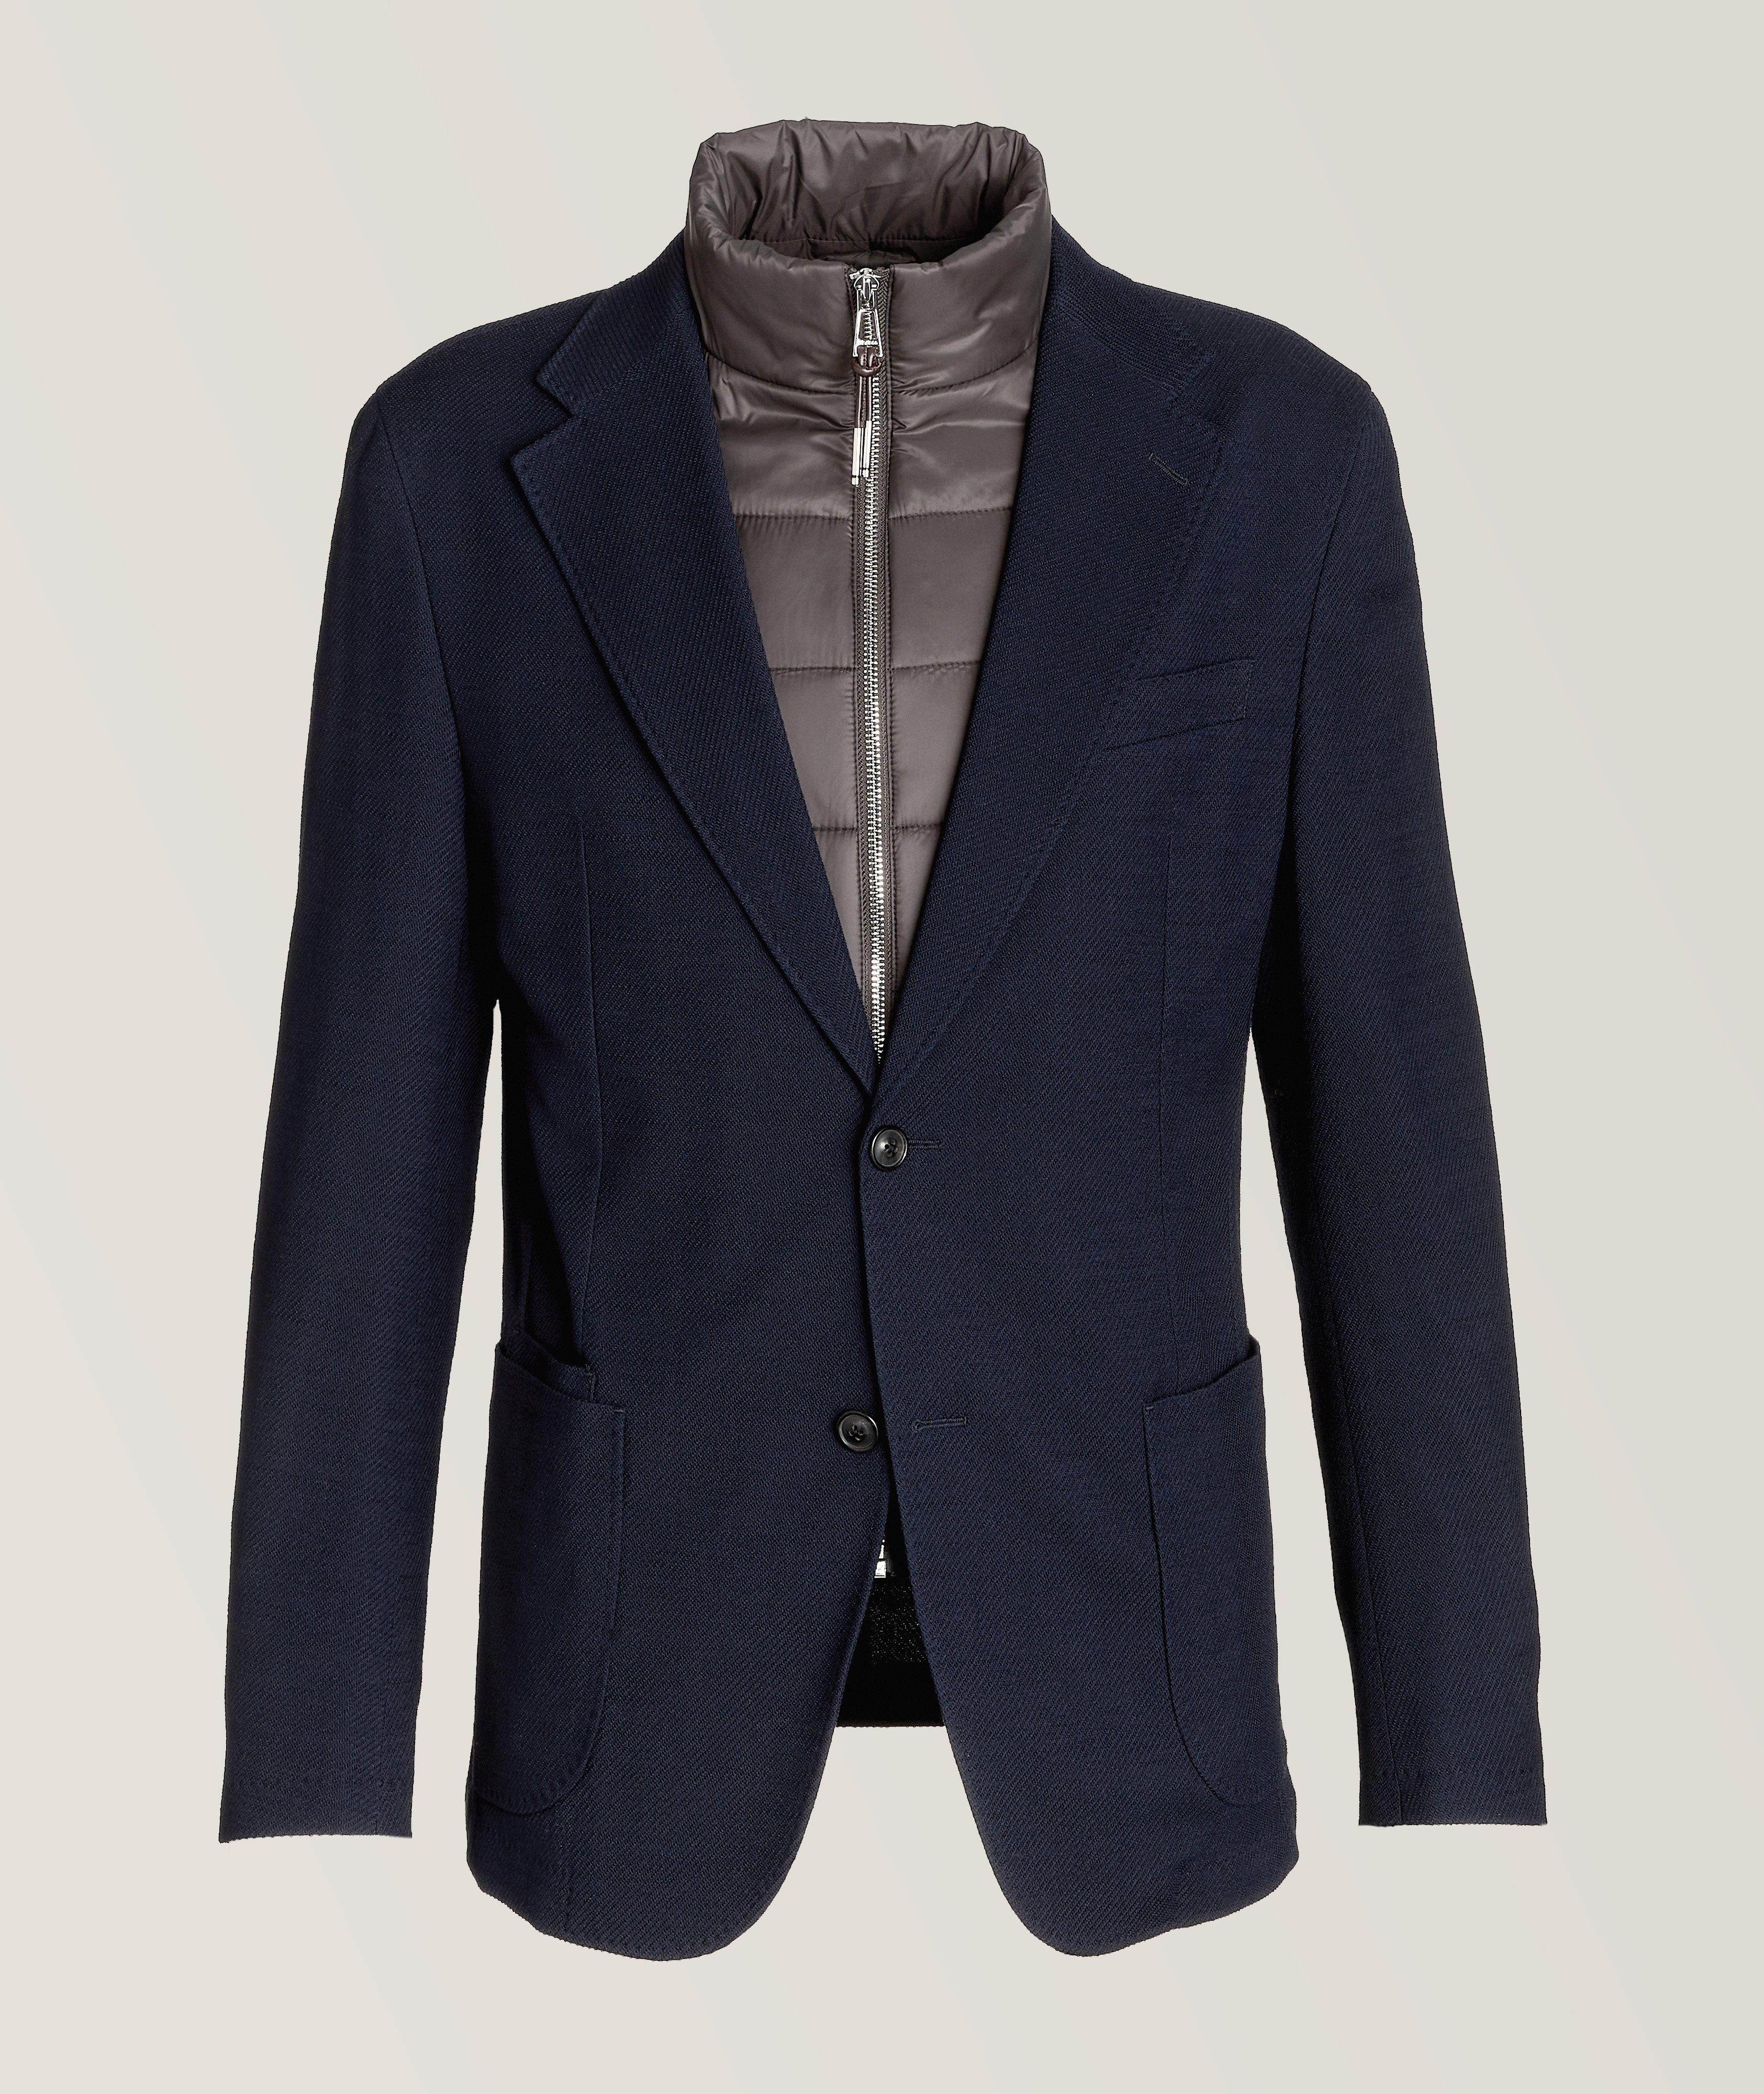 Triest Textured Stretch Wool-Cotton Blend Sport Jacket image 0